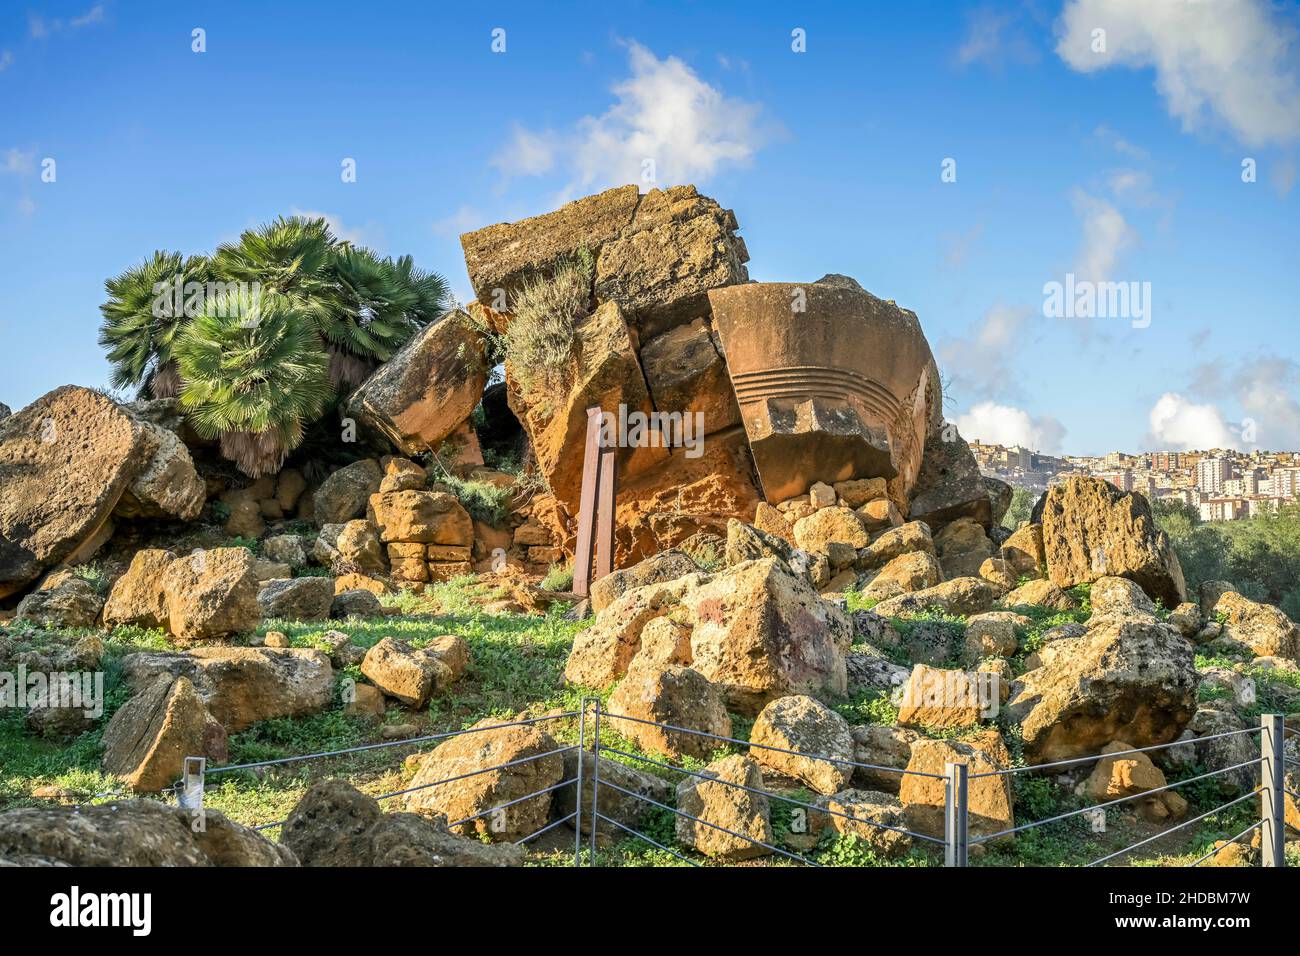 Ruinen, Tempel des Olympischen Zeus, archäologischer Park Valle dei Templi (tal der Tempel), Agrigent, Sizilien, Italien Foto Stock